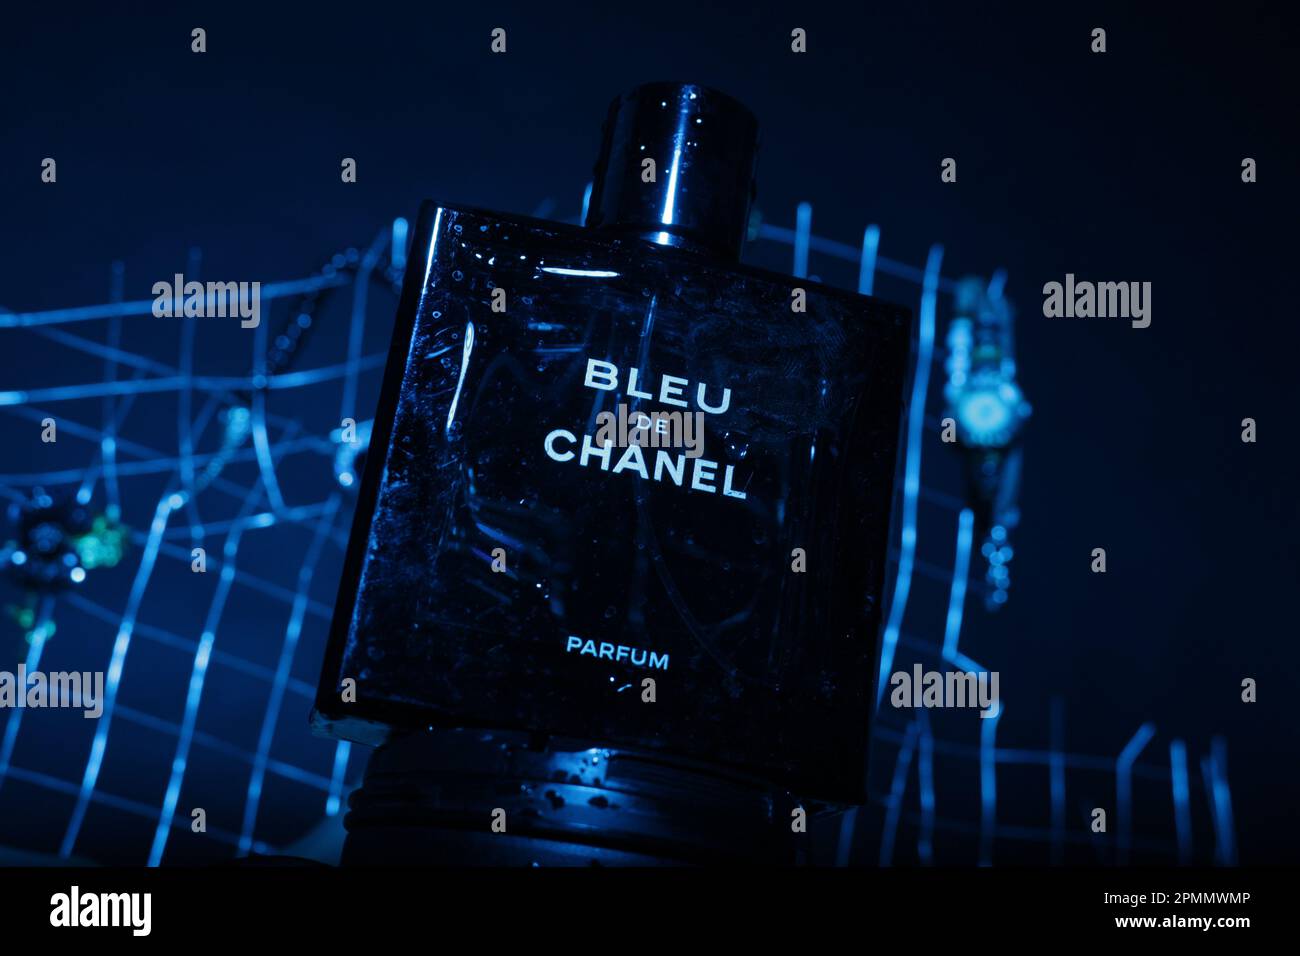 Bleu de chanel hi-res stock photography and images - Alamy